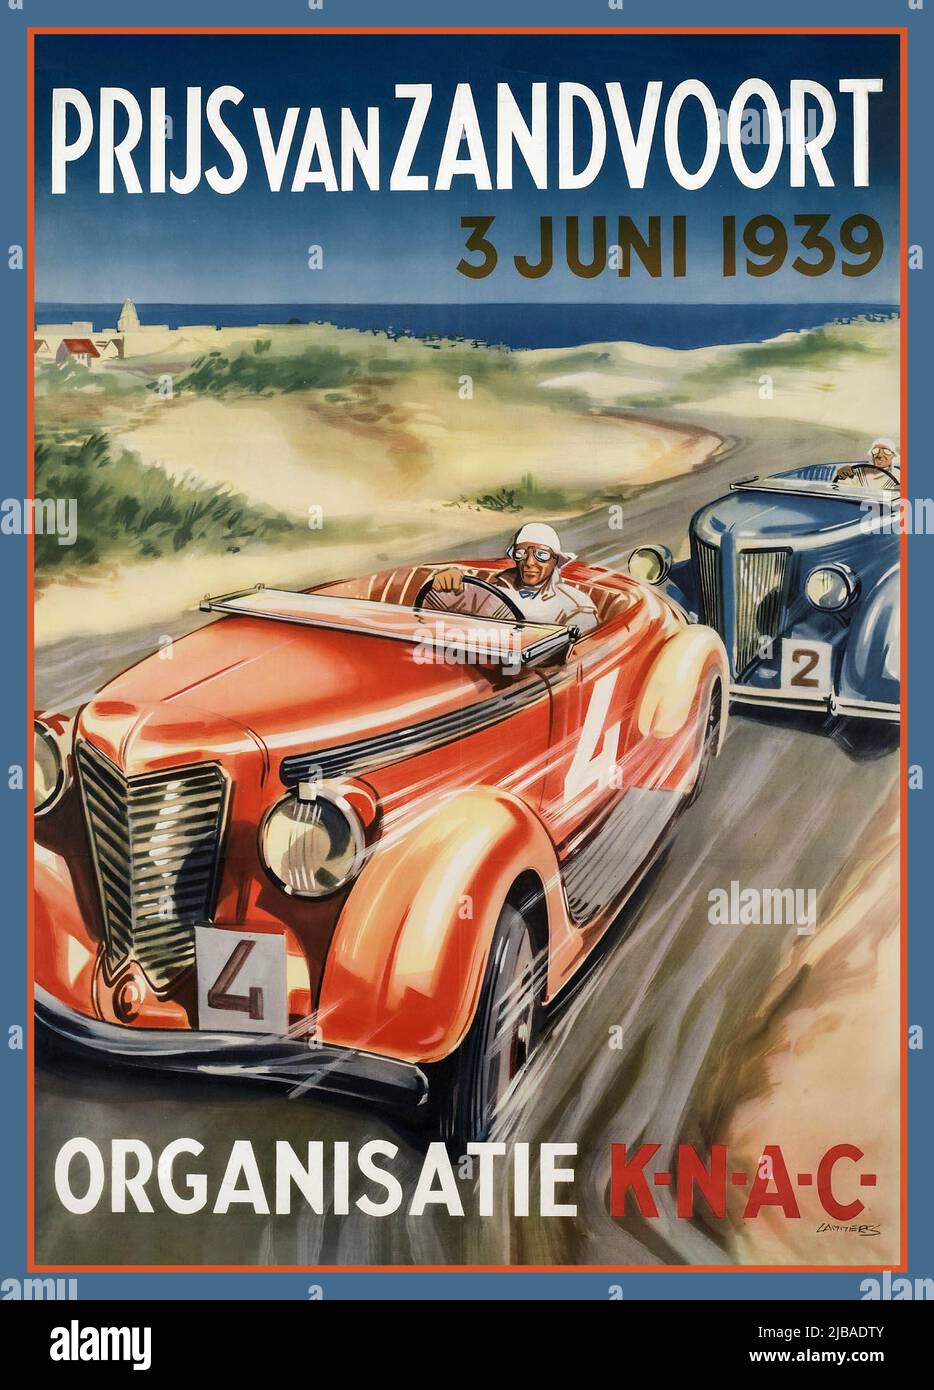 Vintage 1939 Motor Rally at Zandvoort Organisation KNAC Dutch Holland Poster by H. Lammers - prijs van Zandvoort K.N.A.C. Banque D'Images